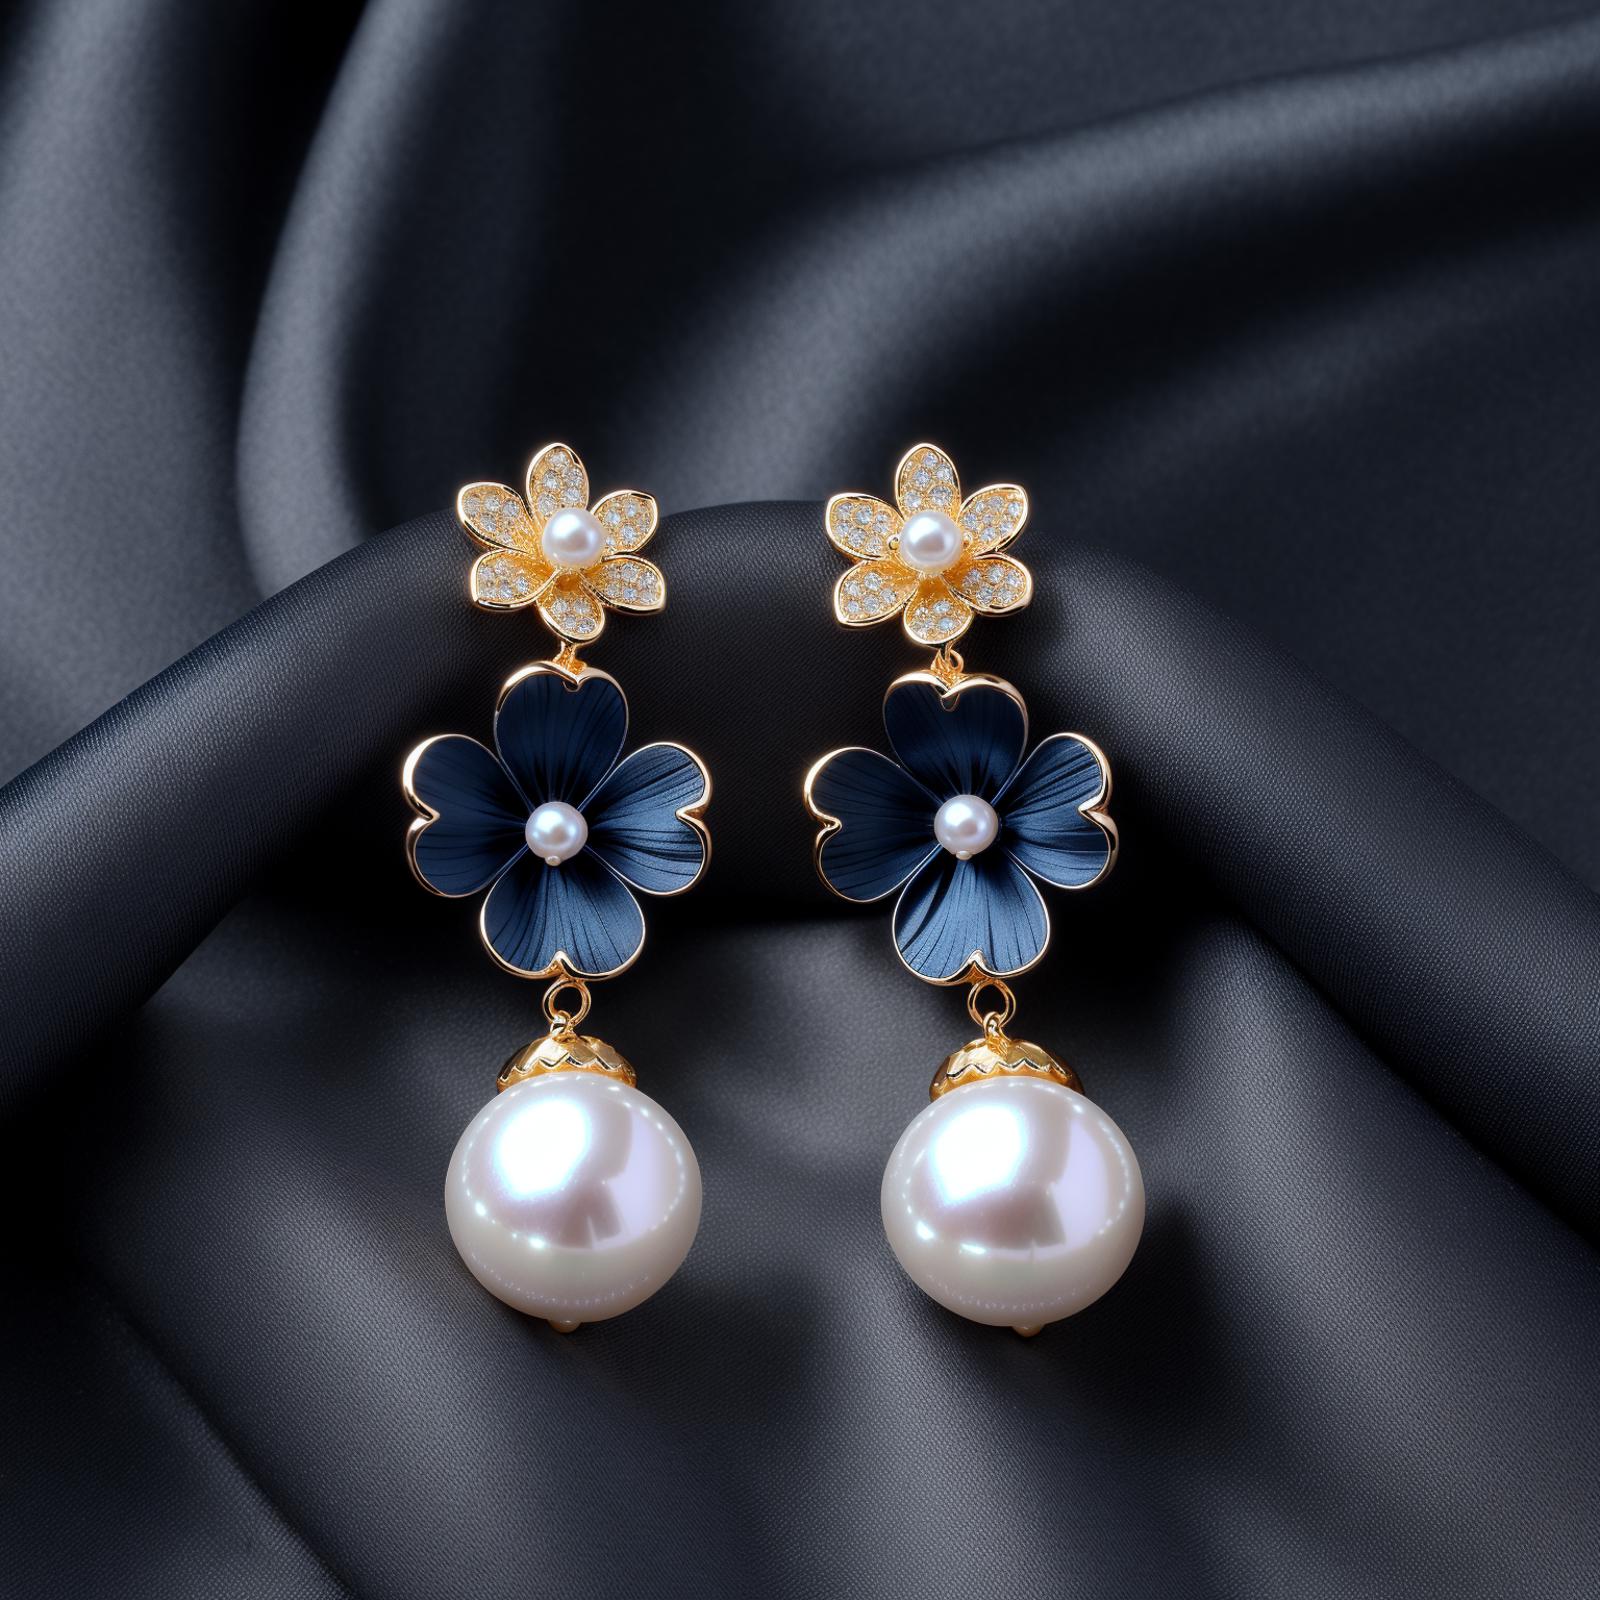 pearl earrings lora - 珍珠耳环 image by kuyin